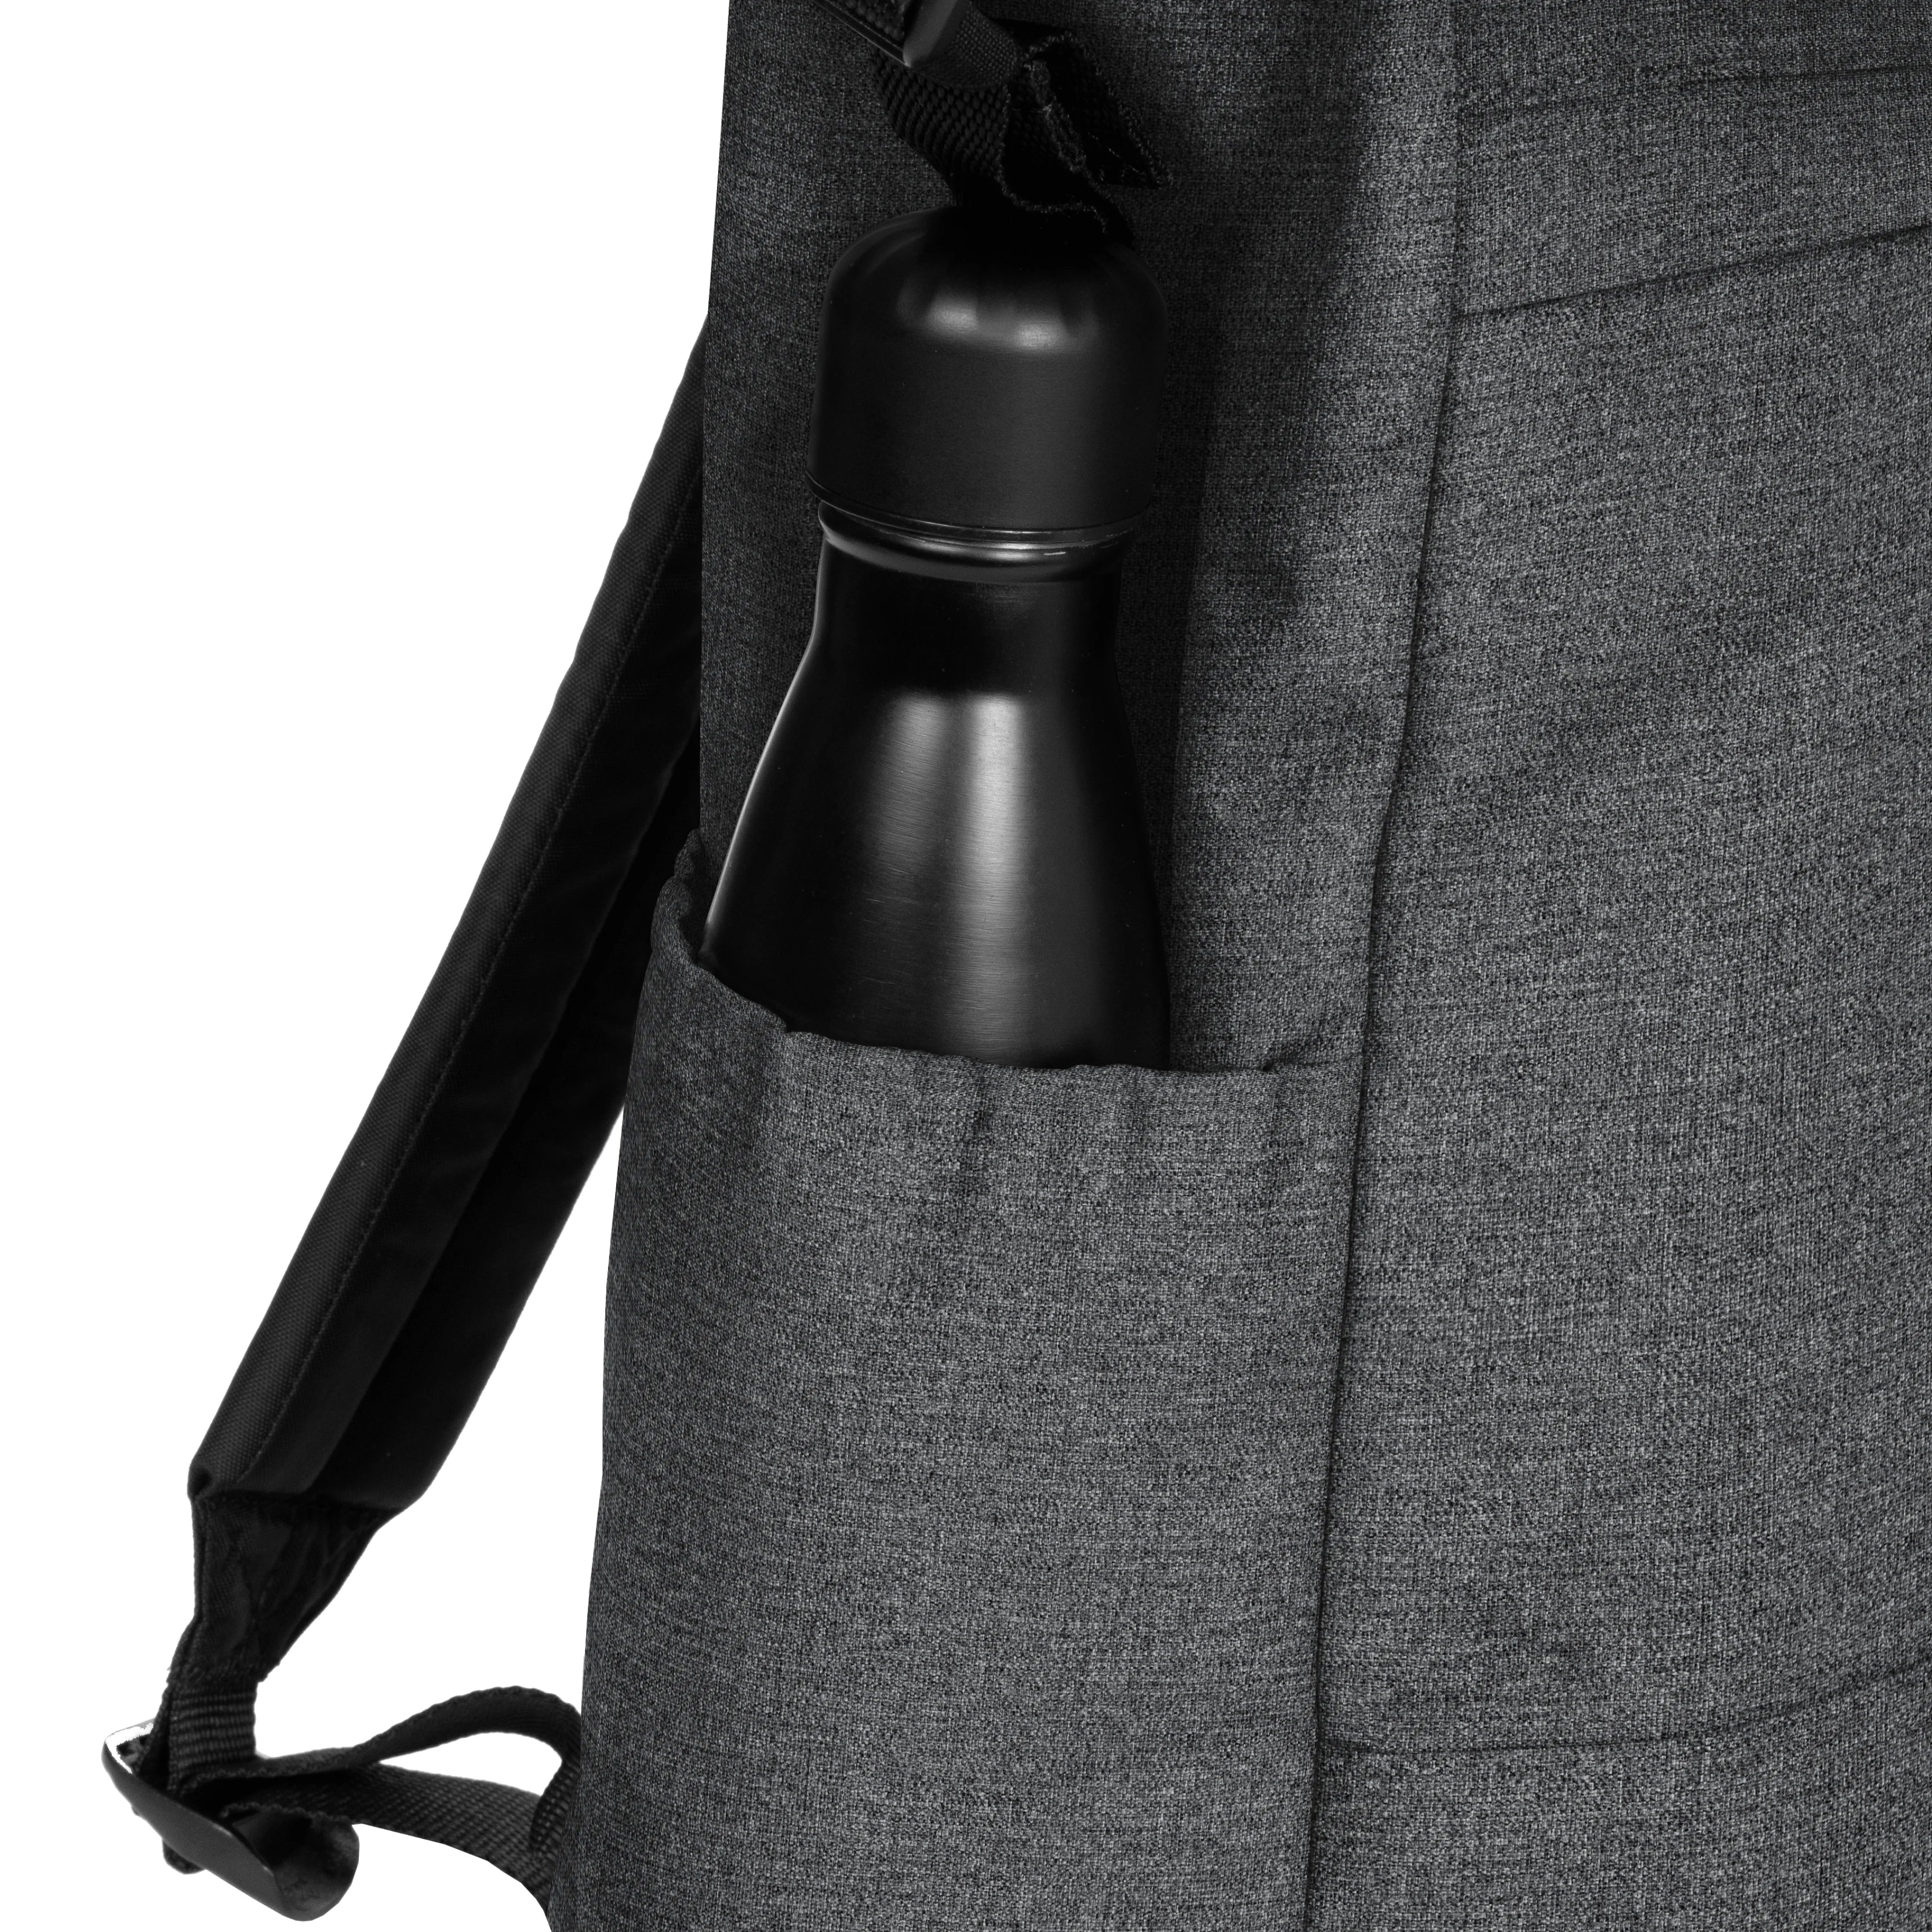 Eastpak Authentic Chester Backpack 43 cm - Black Denim